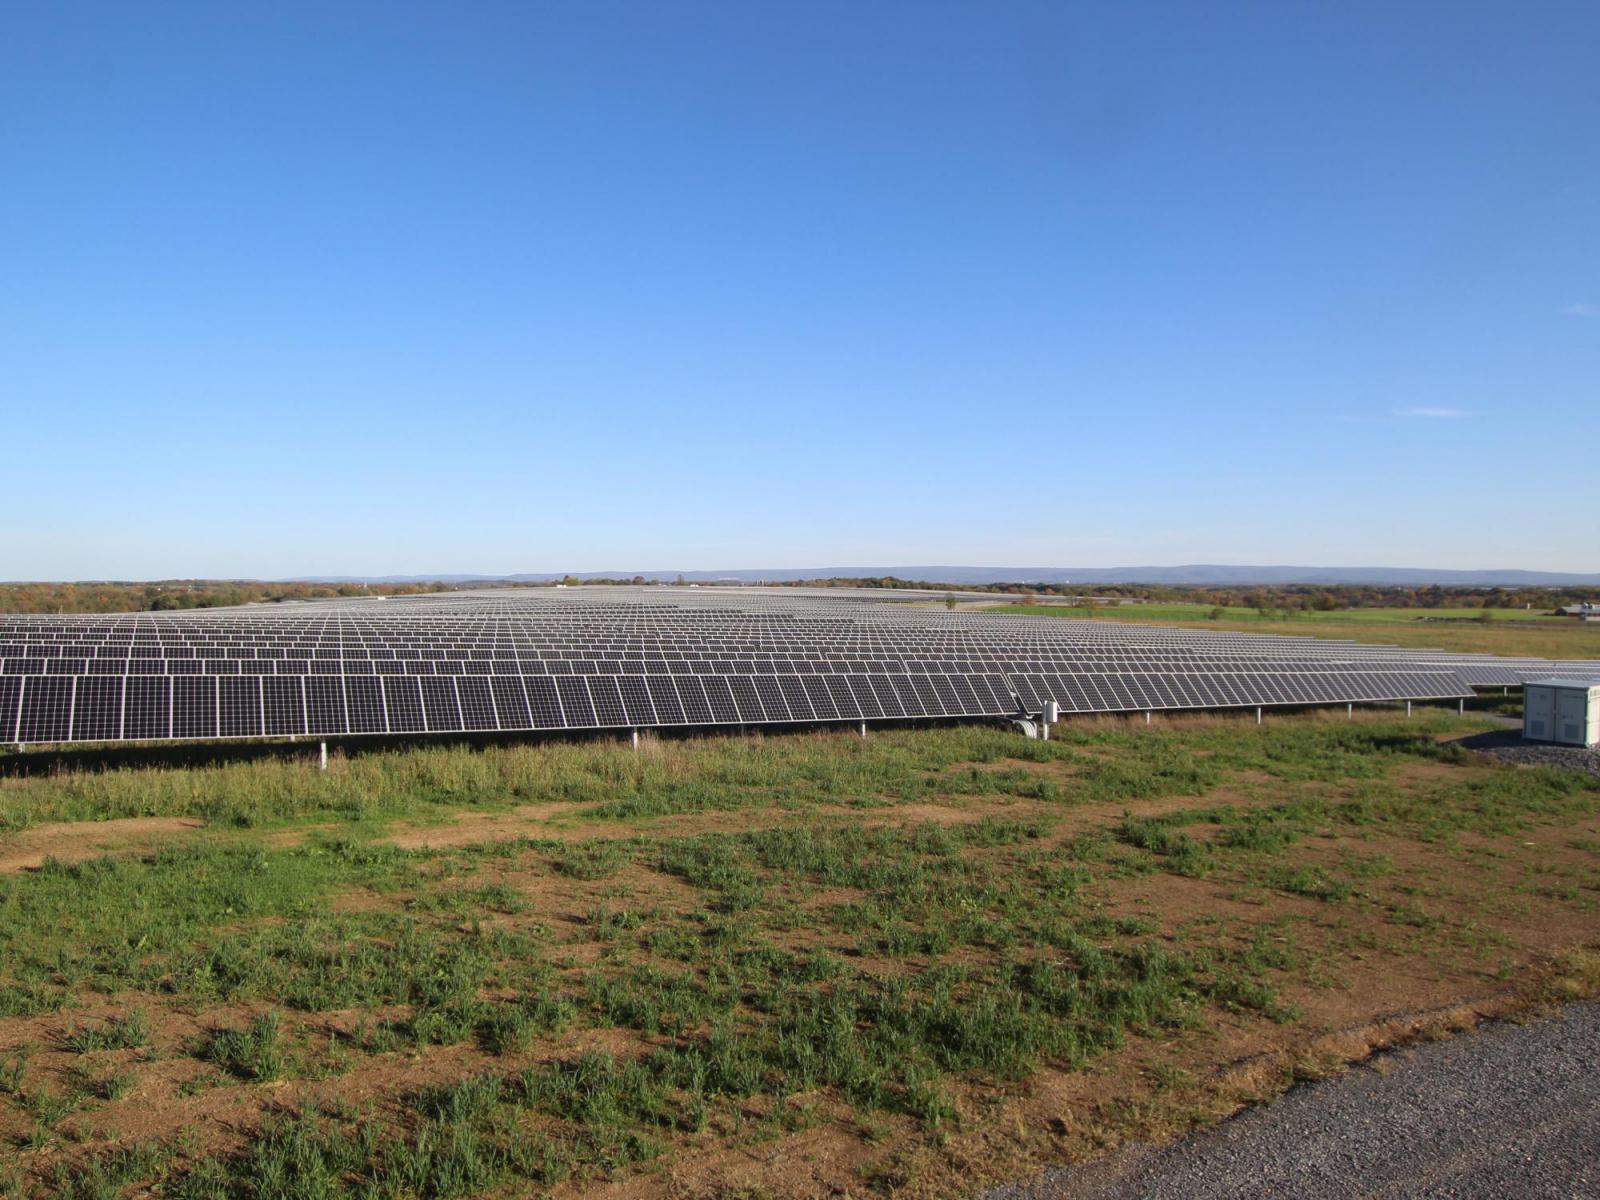 Field full of solar panels.